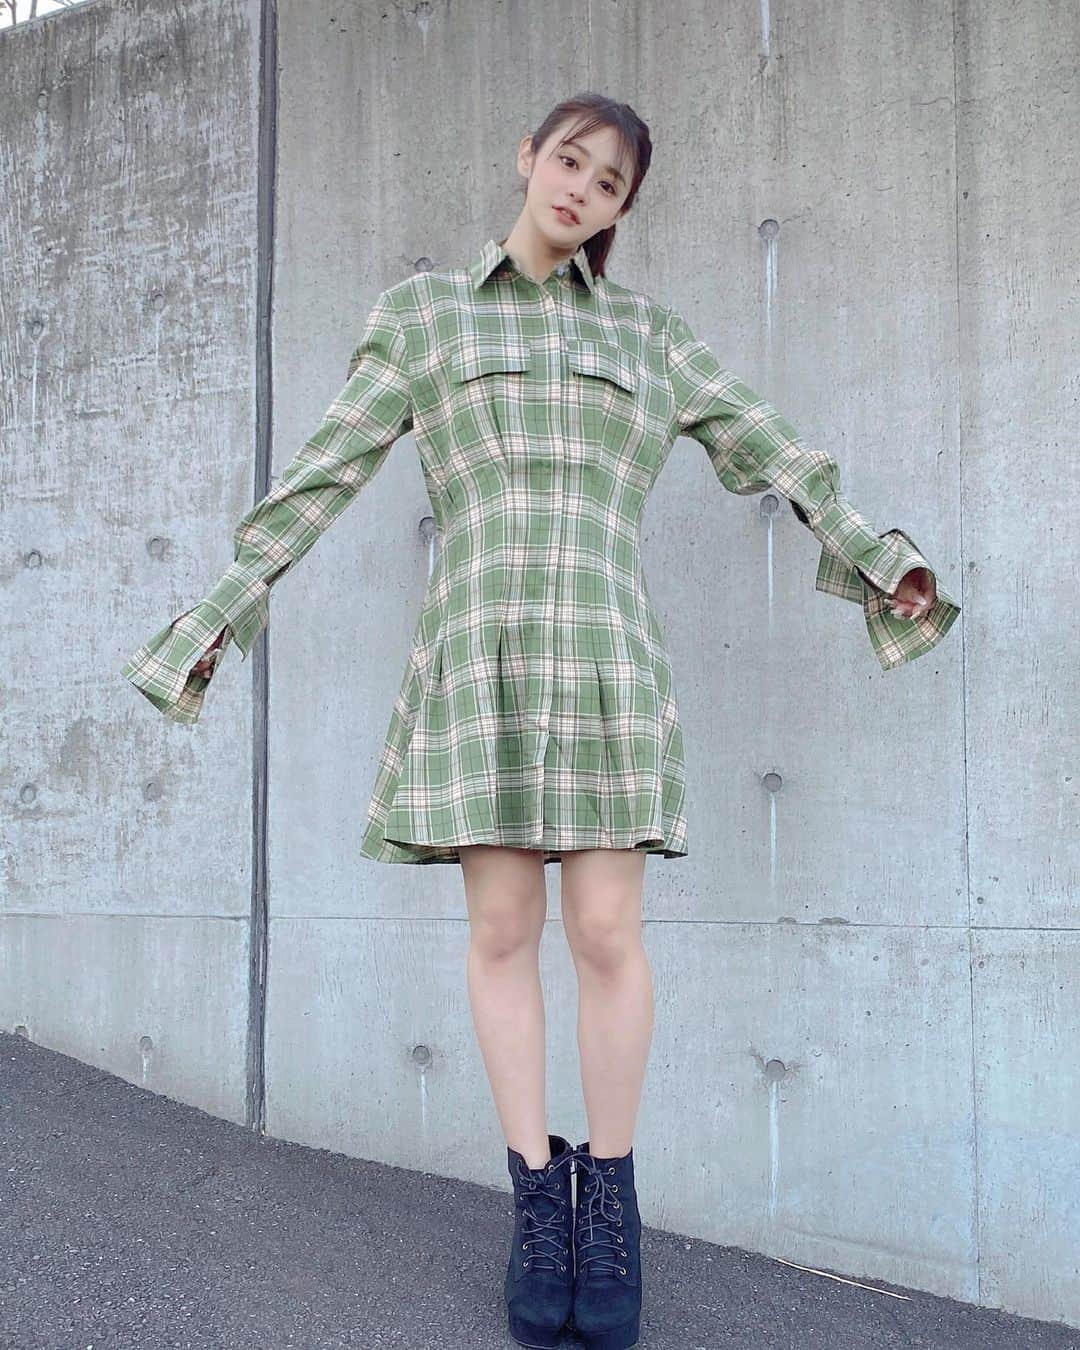 Raniのインスタグラム：「@dleepytown_official で買ったワンピースがめちゃくちゃ可愛いから見て👀  #dleepytown #japanesegirl #fashion #ootd #shirt #shirtdress #green #plaid #plaidshirt #happy」